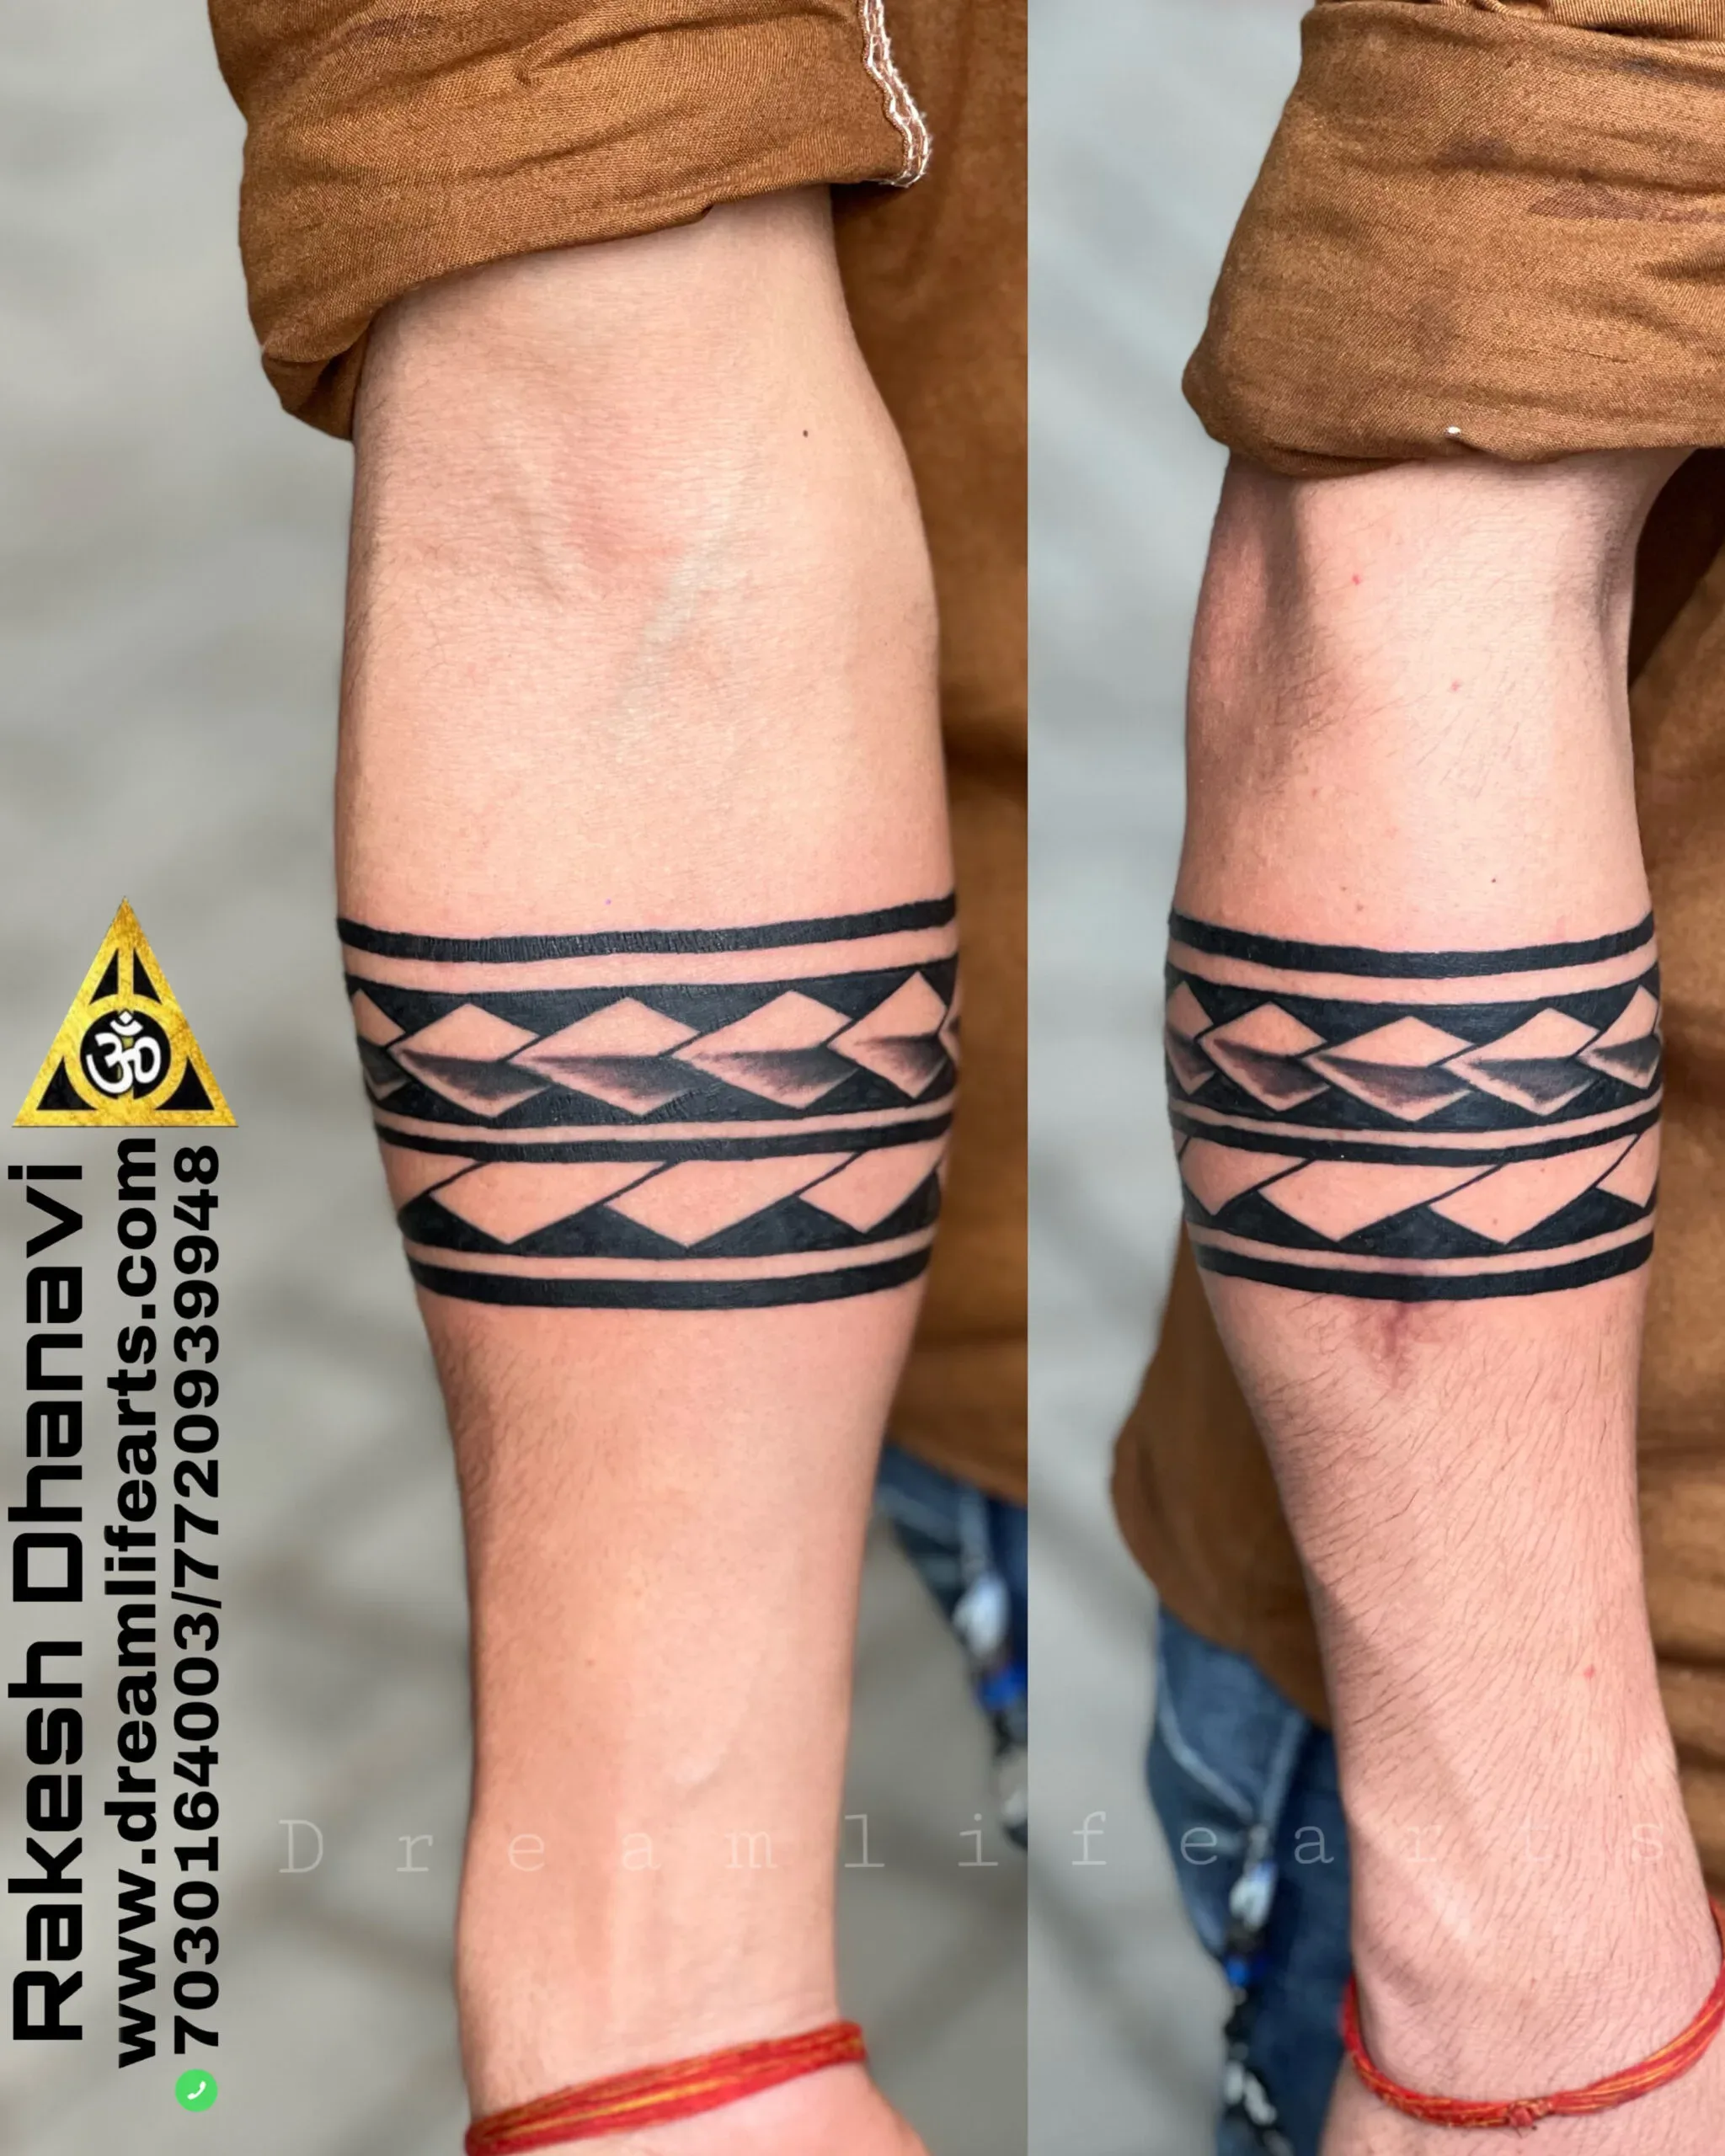 om with trishul armband tattoo Best Tattoo studio in India Black Poison